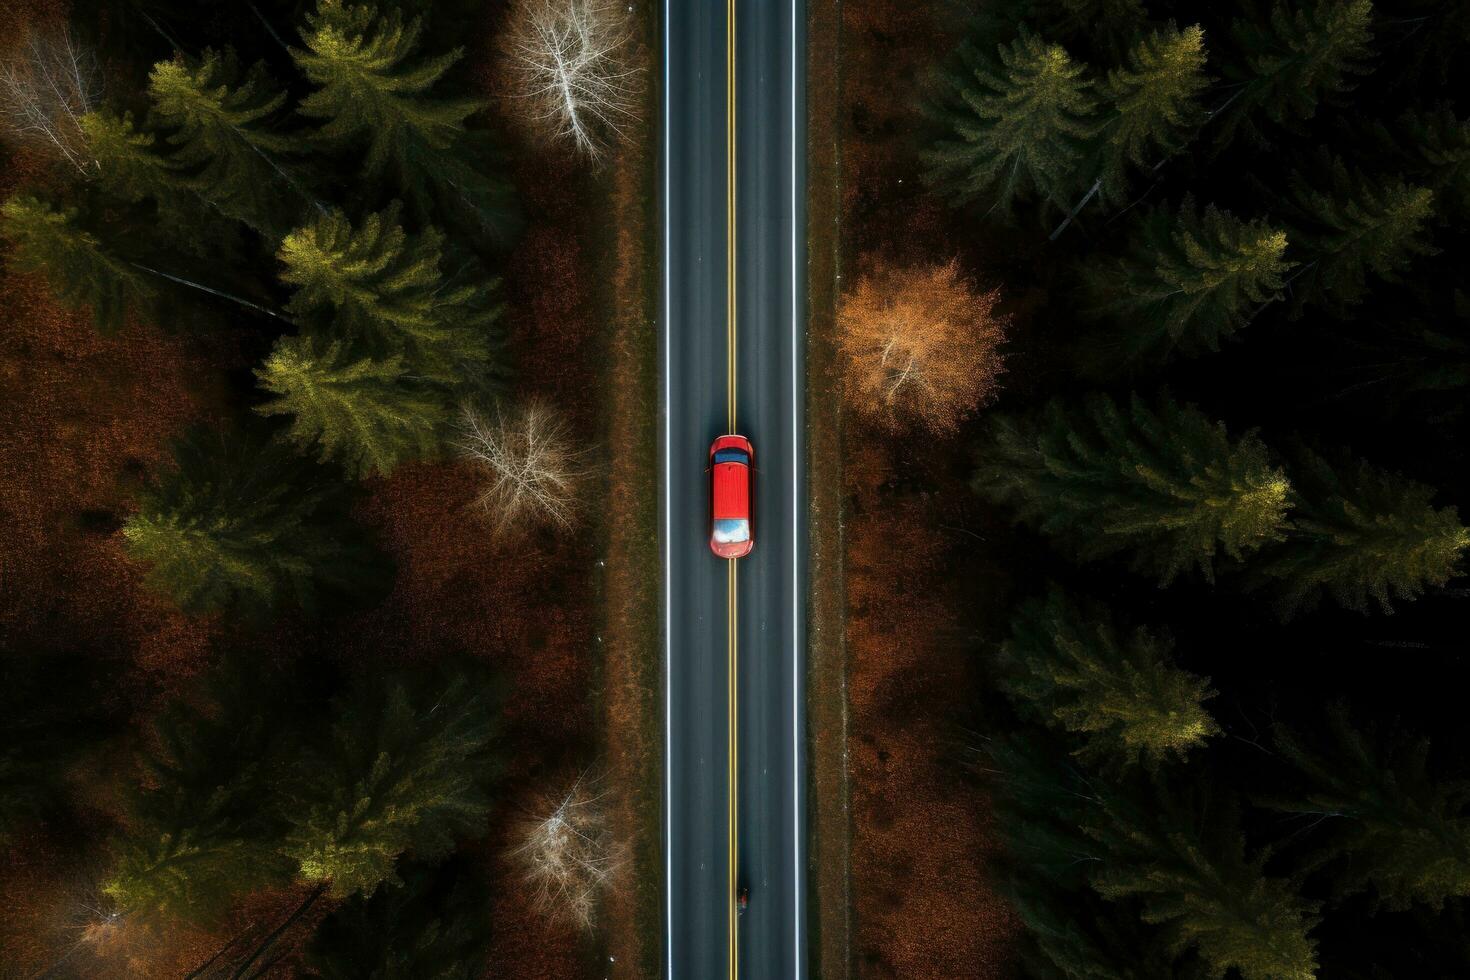 A car driving down a highway through tall trees photo